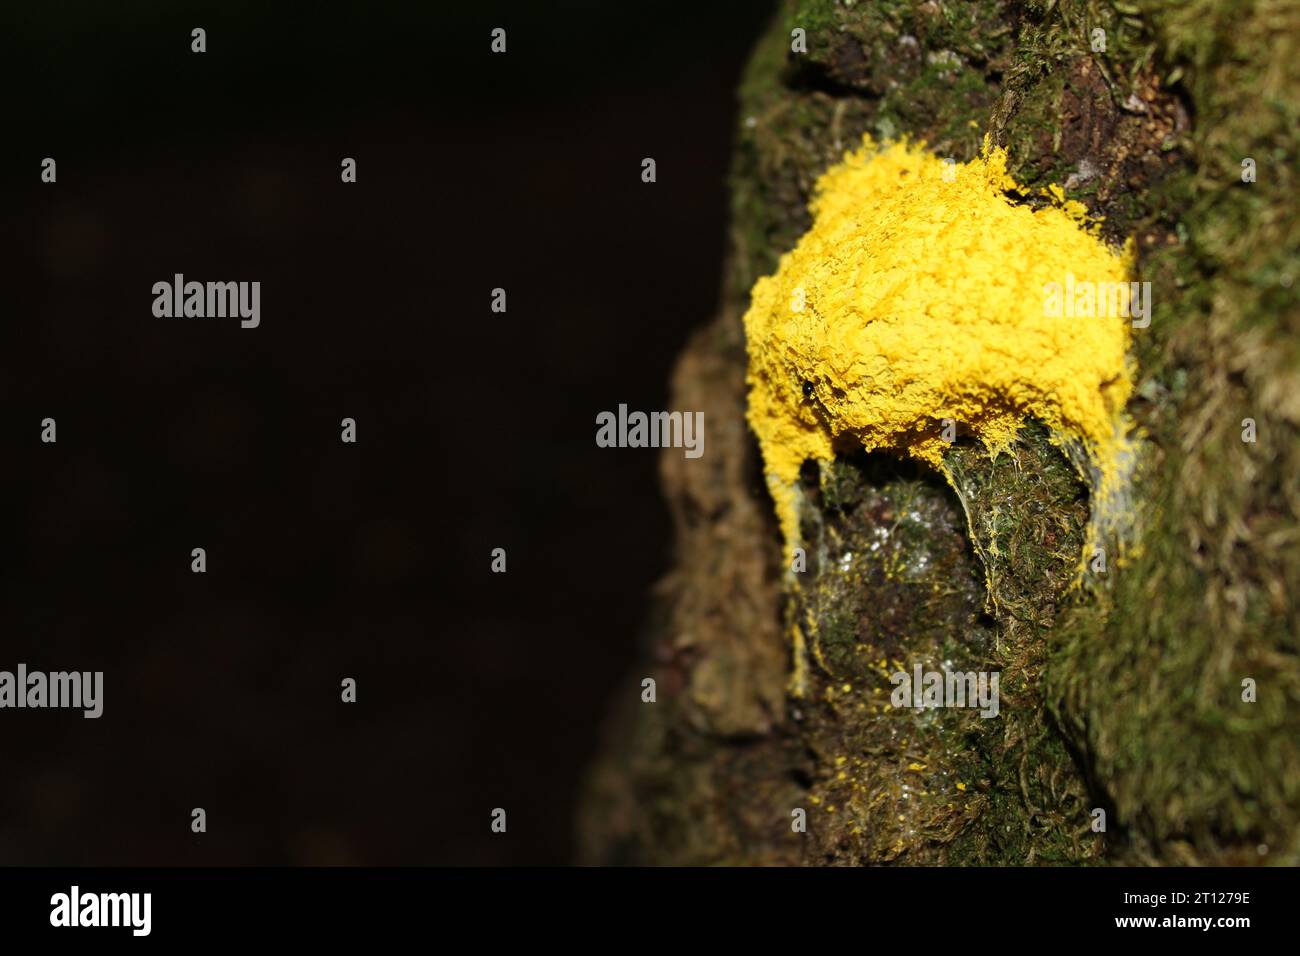 Dog Vomit/Scrambled Egg Slime Mould (Fuligo septica) on a tree Stock Photo